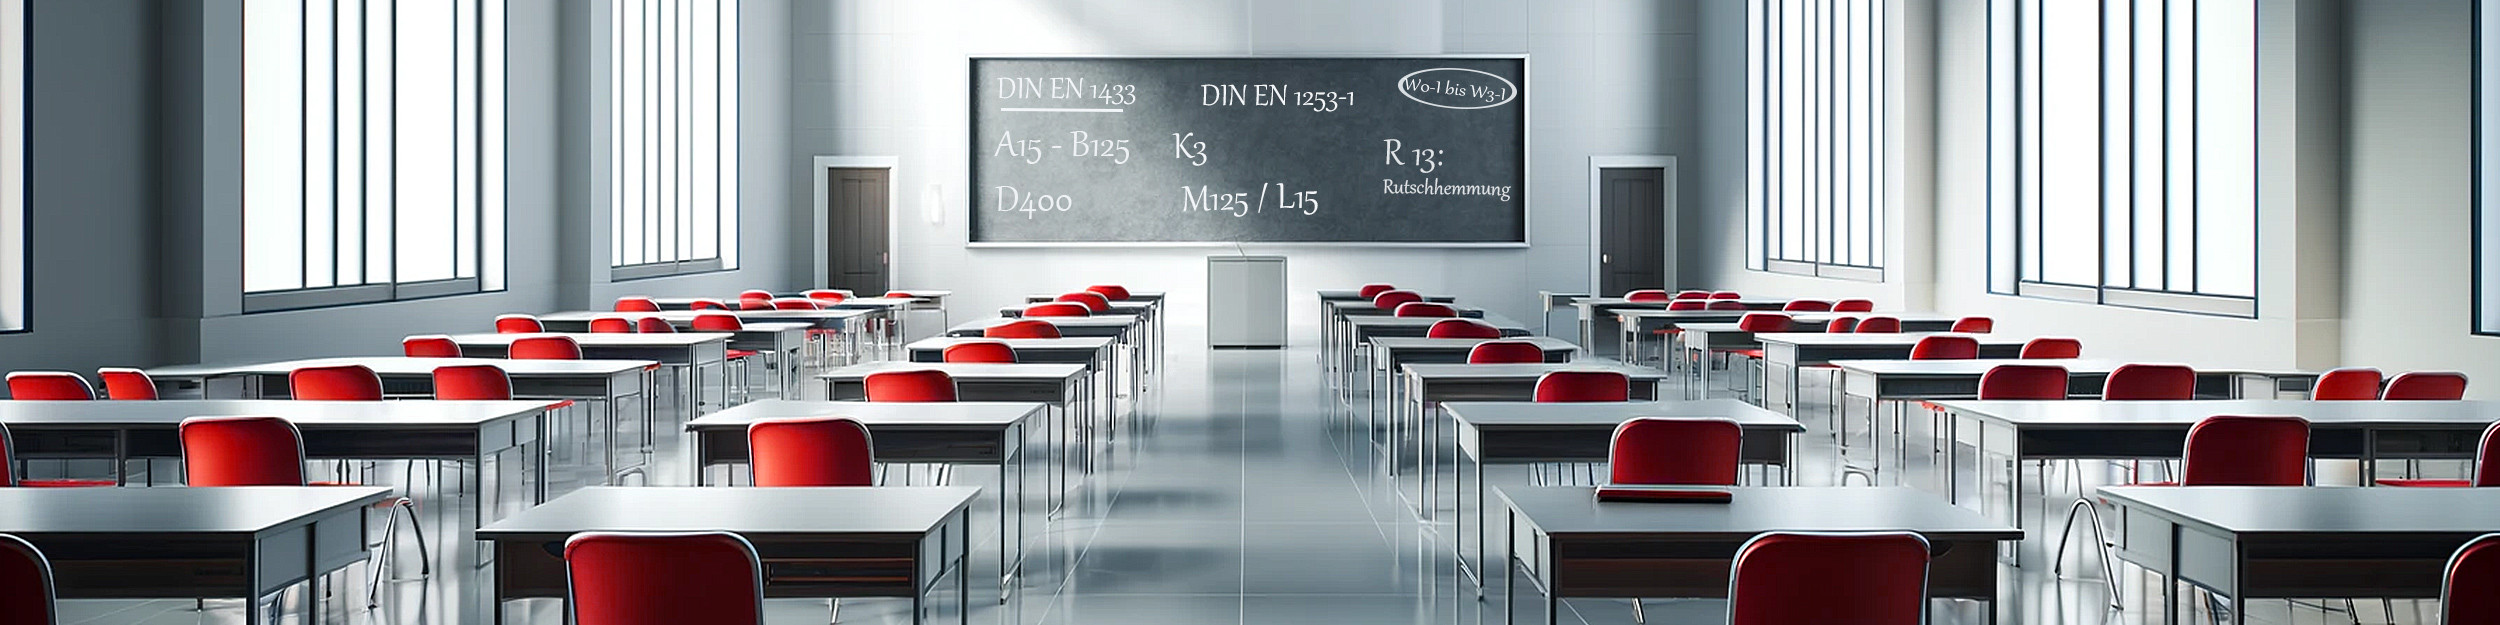 Klassenraum-rote-Stühle-Tafel-Klassen-Gebäudeentwässerung